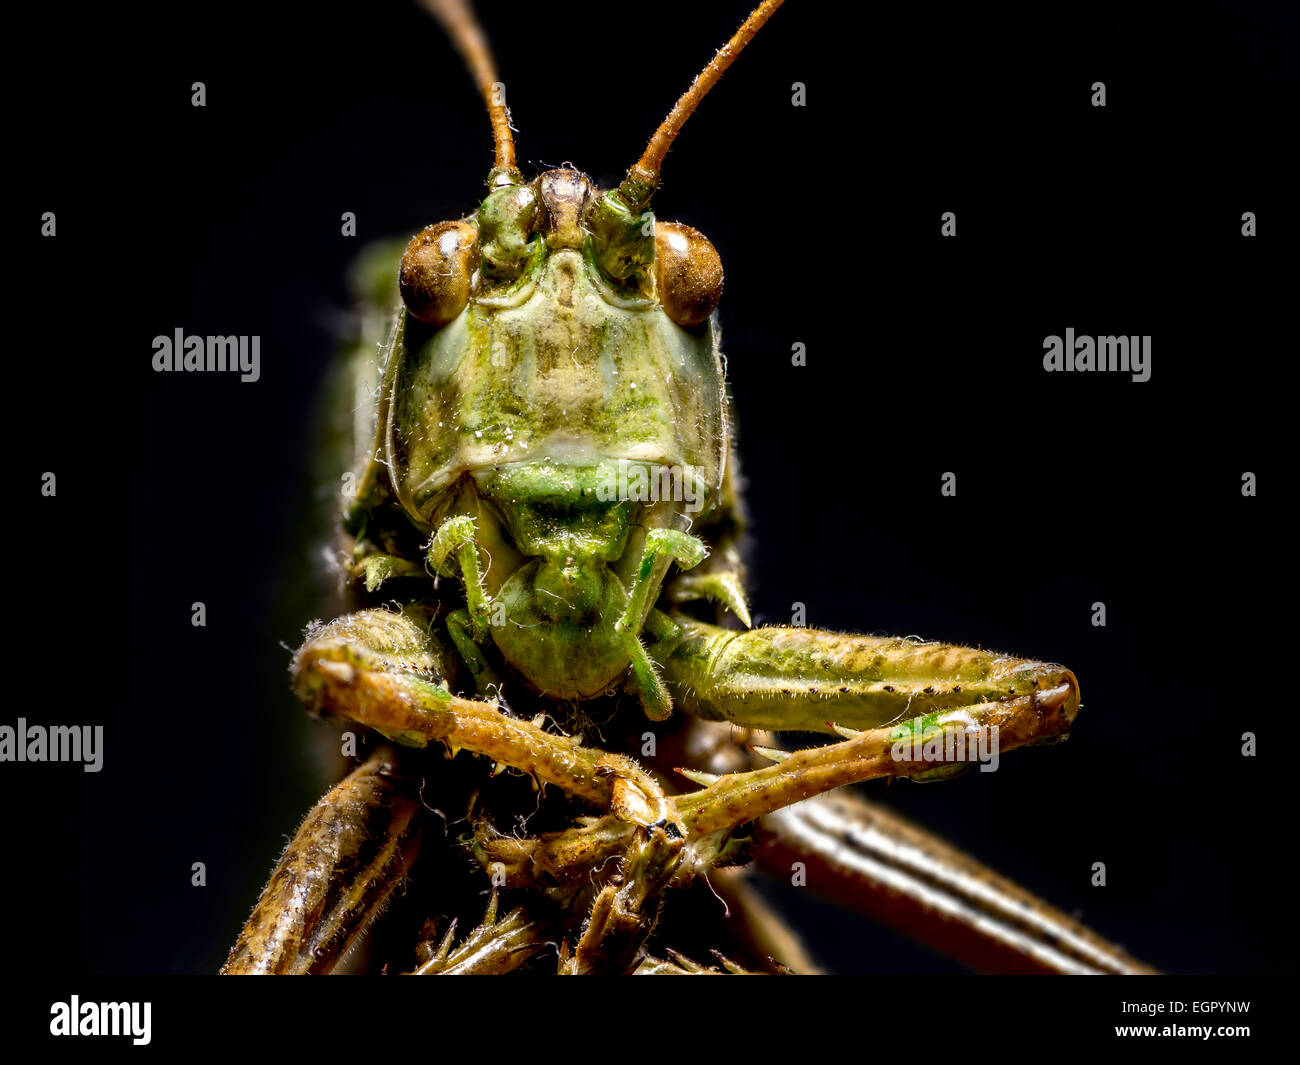 Macro shot of grasshopper on black background Stock Photo